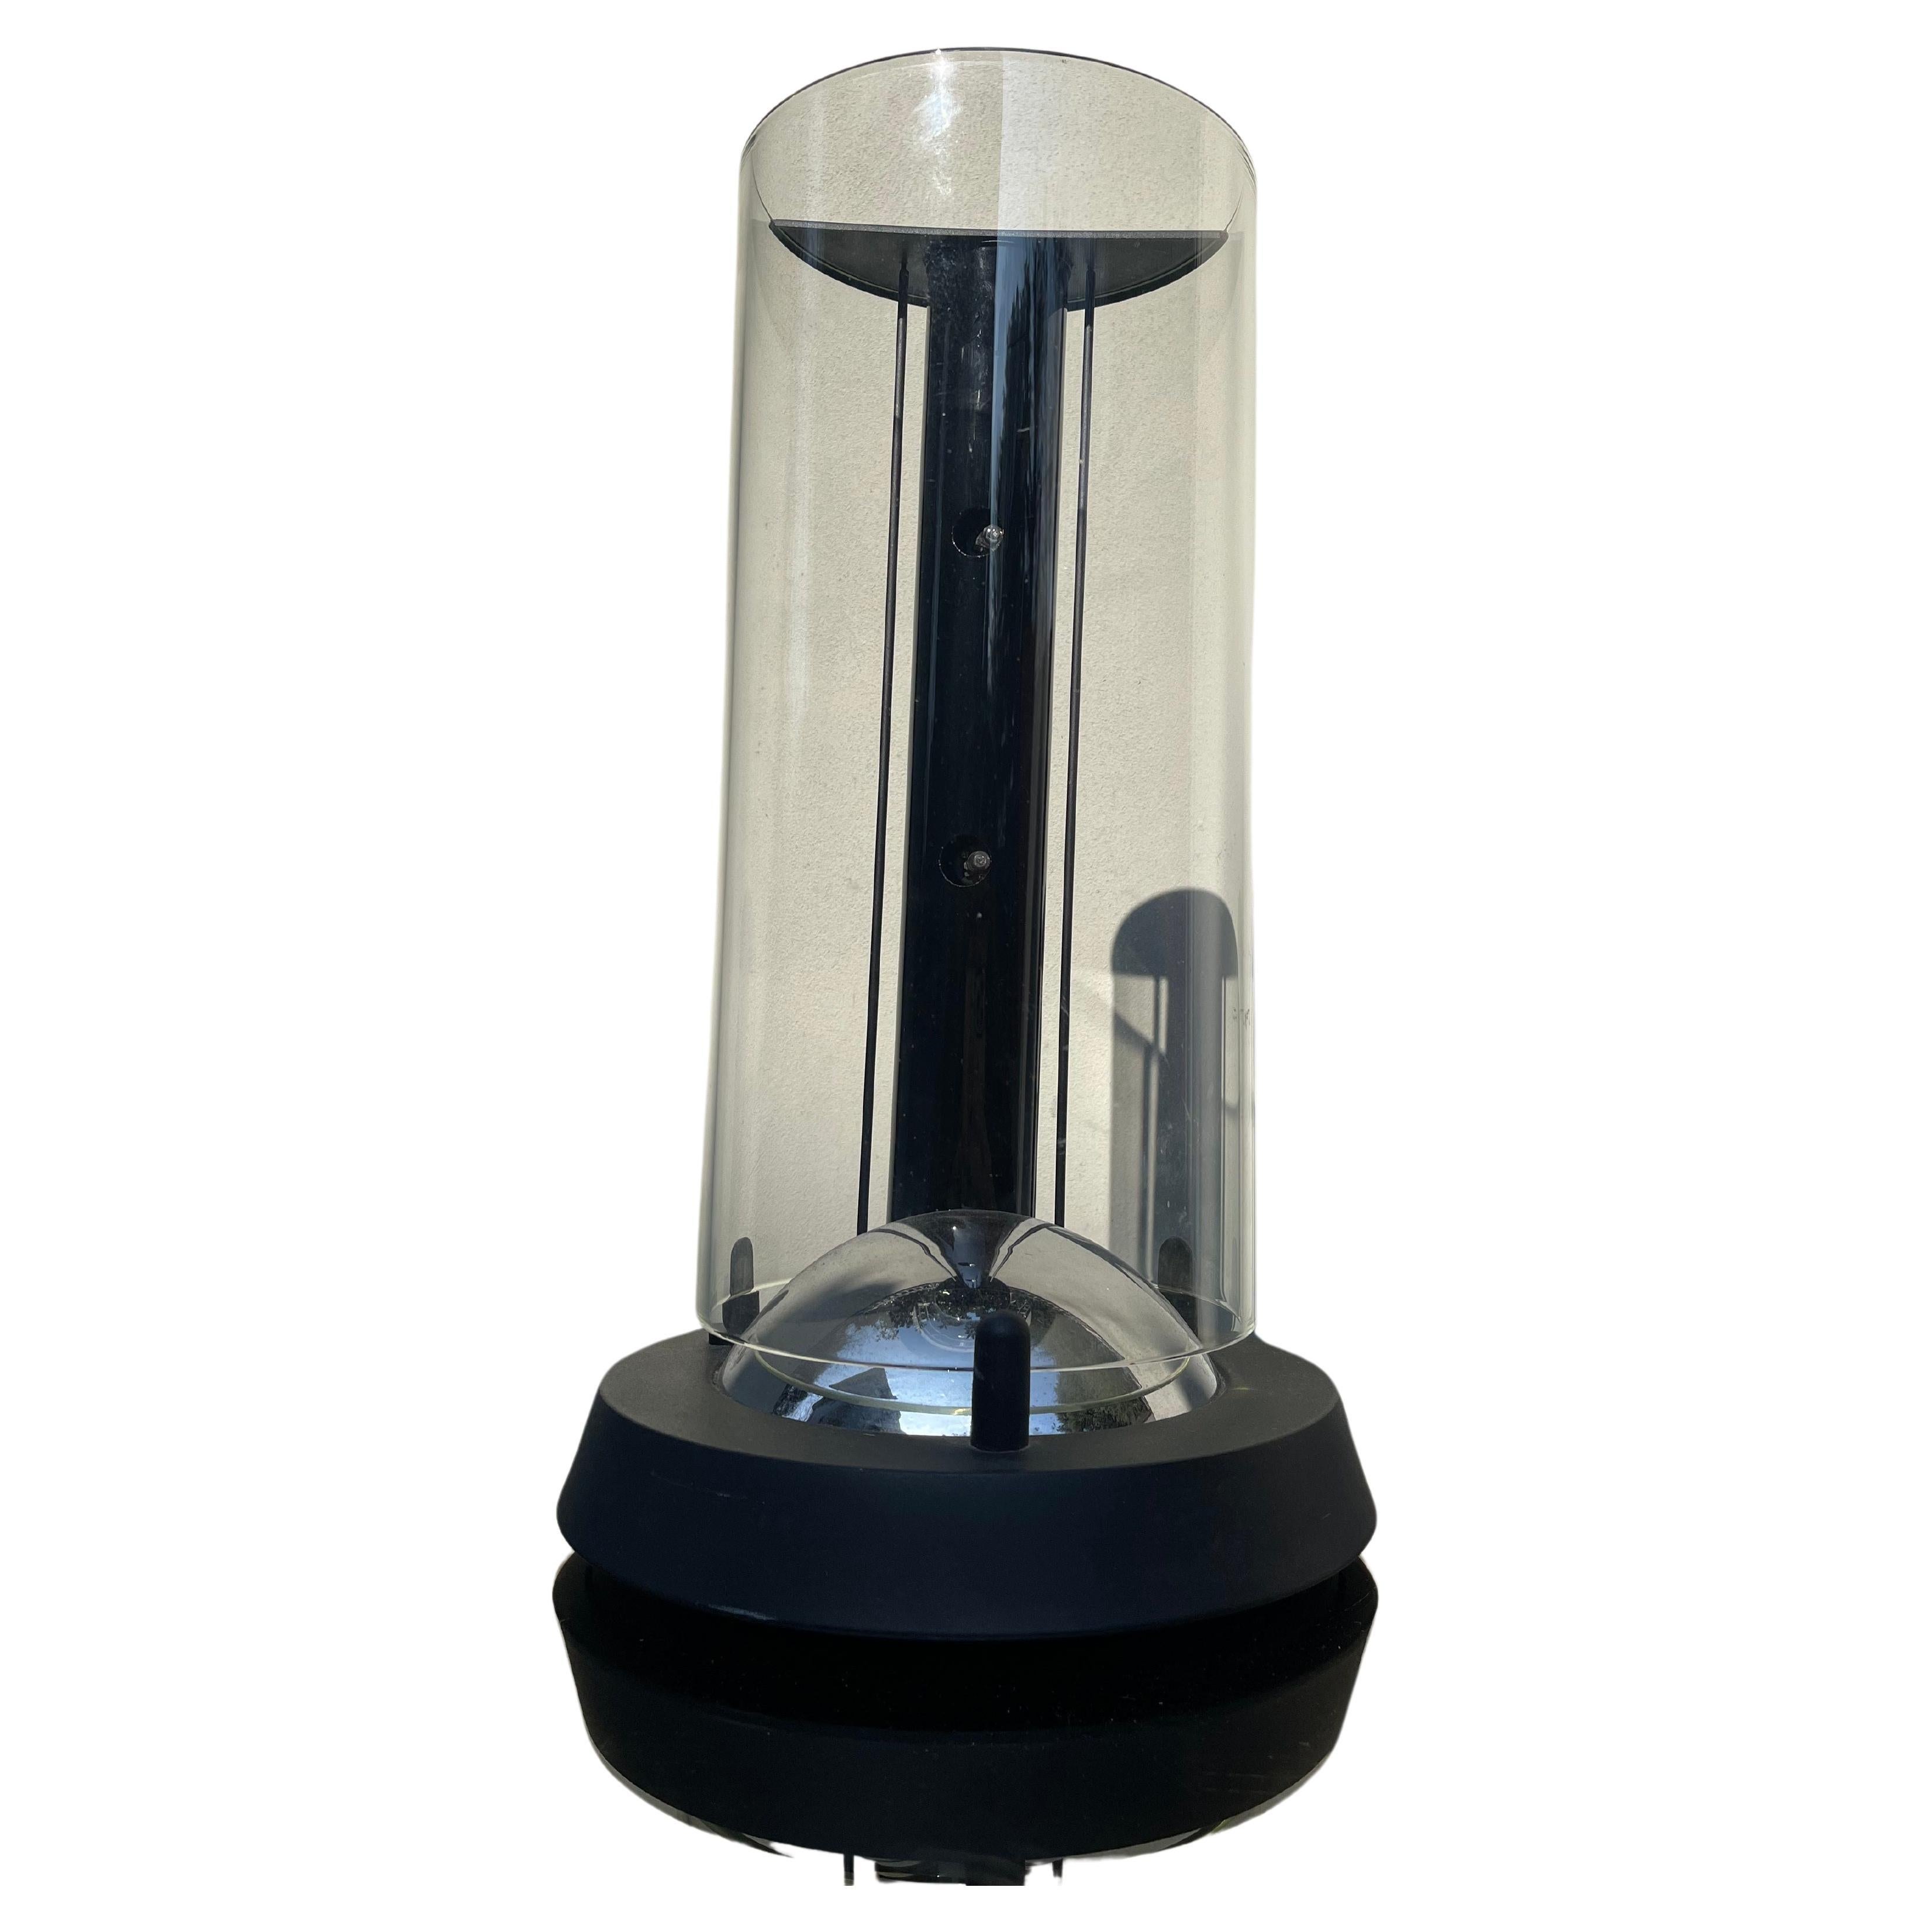 Lampe design fine anni 70 - vetro trasparente - luci alogene - design en vente